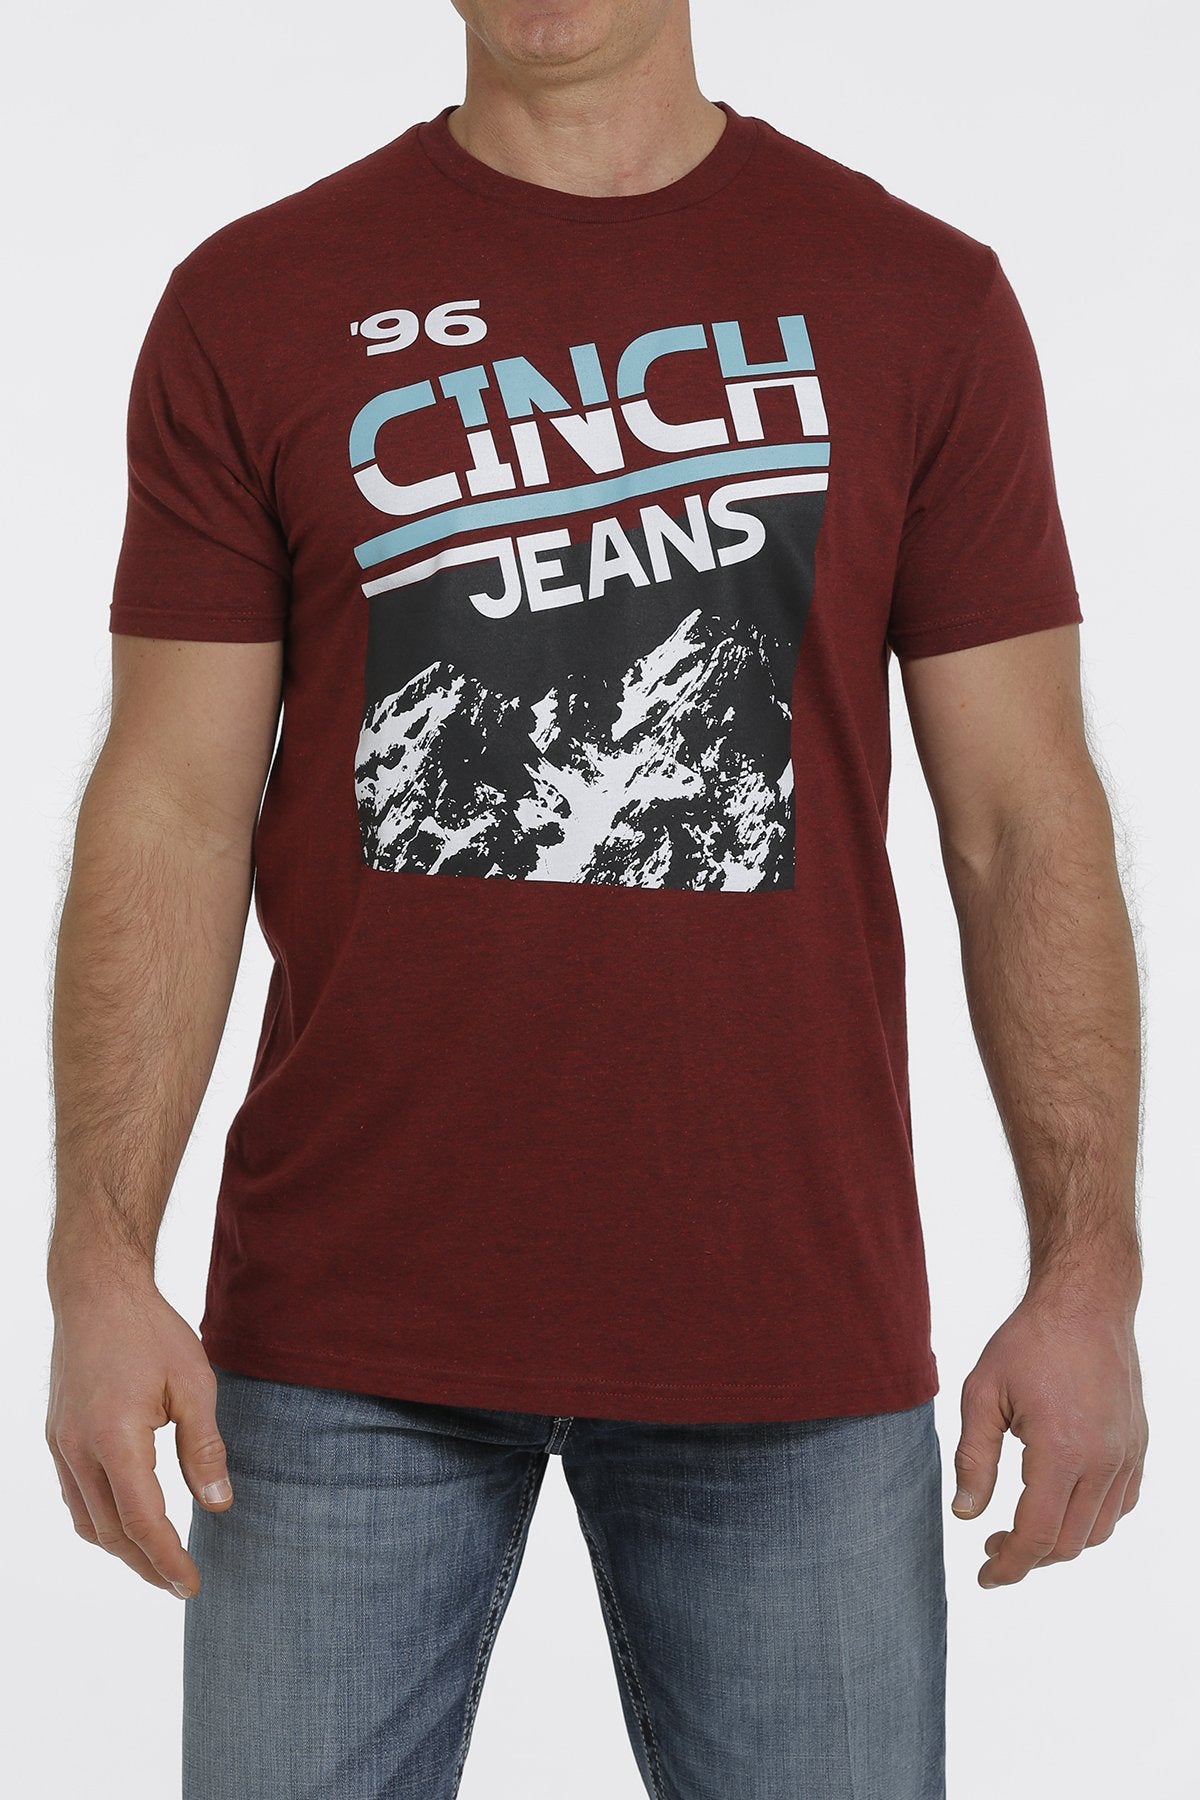 Mens Cinch 96 Jeans Tee Tshirt - Cranberry (6809261047885)